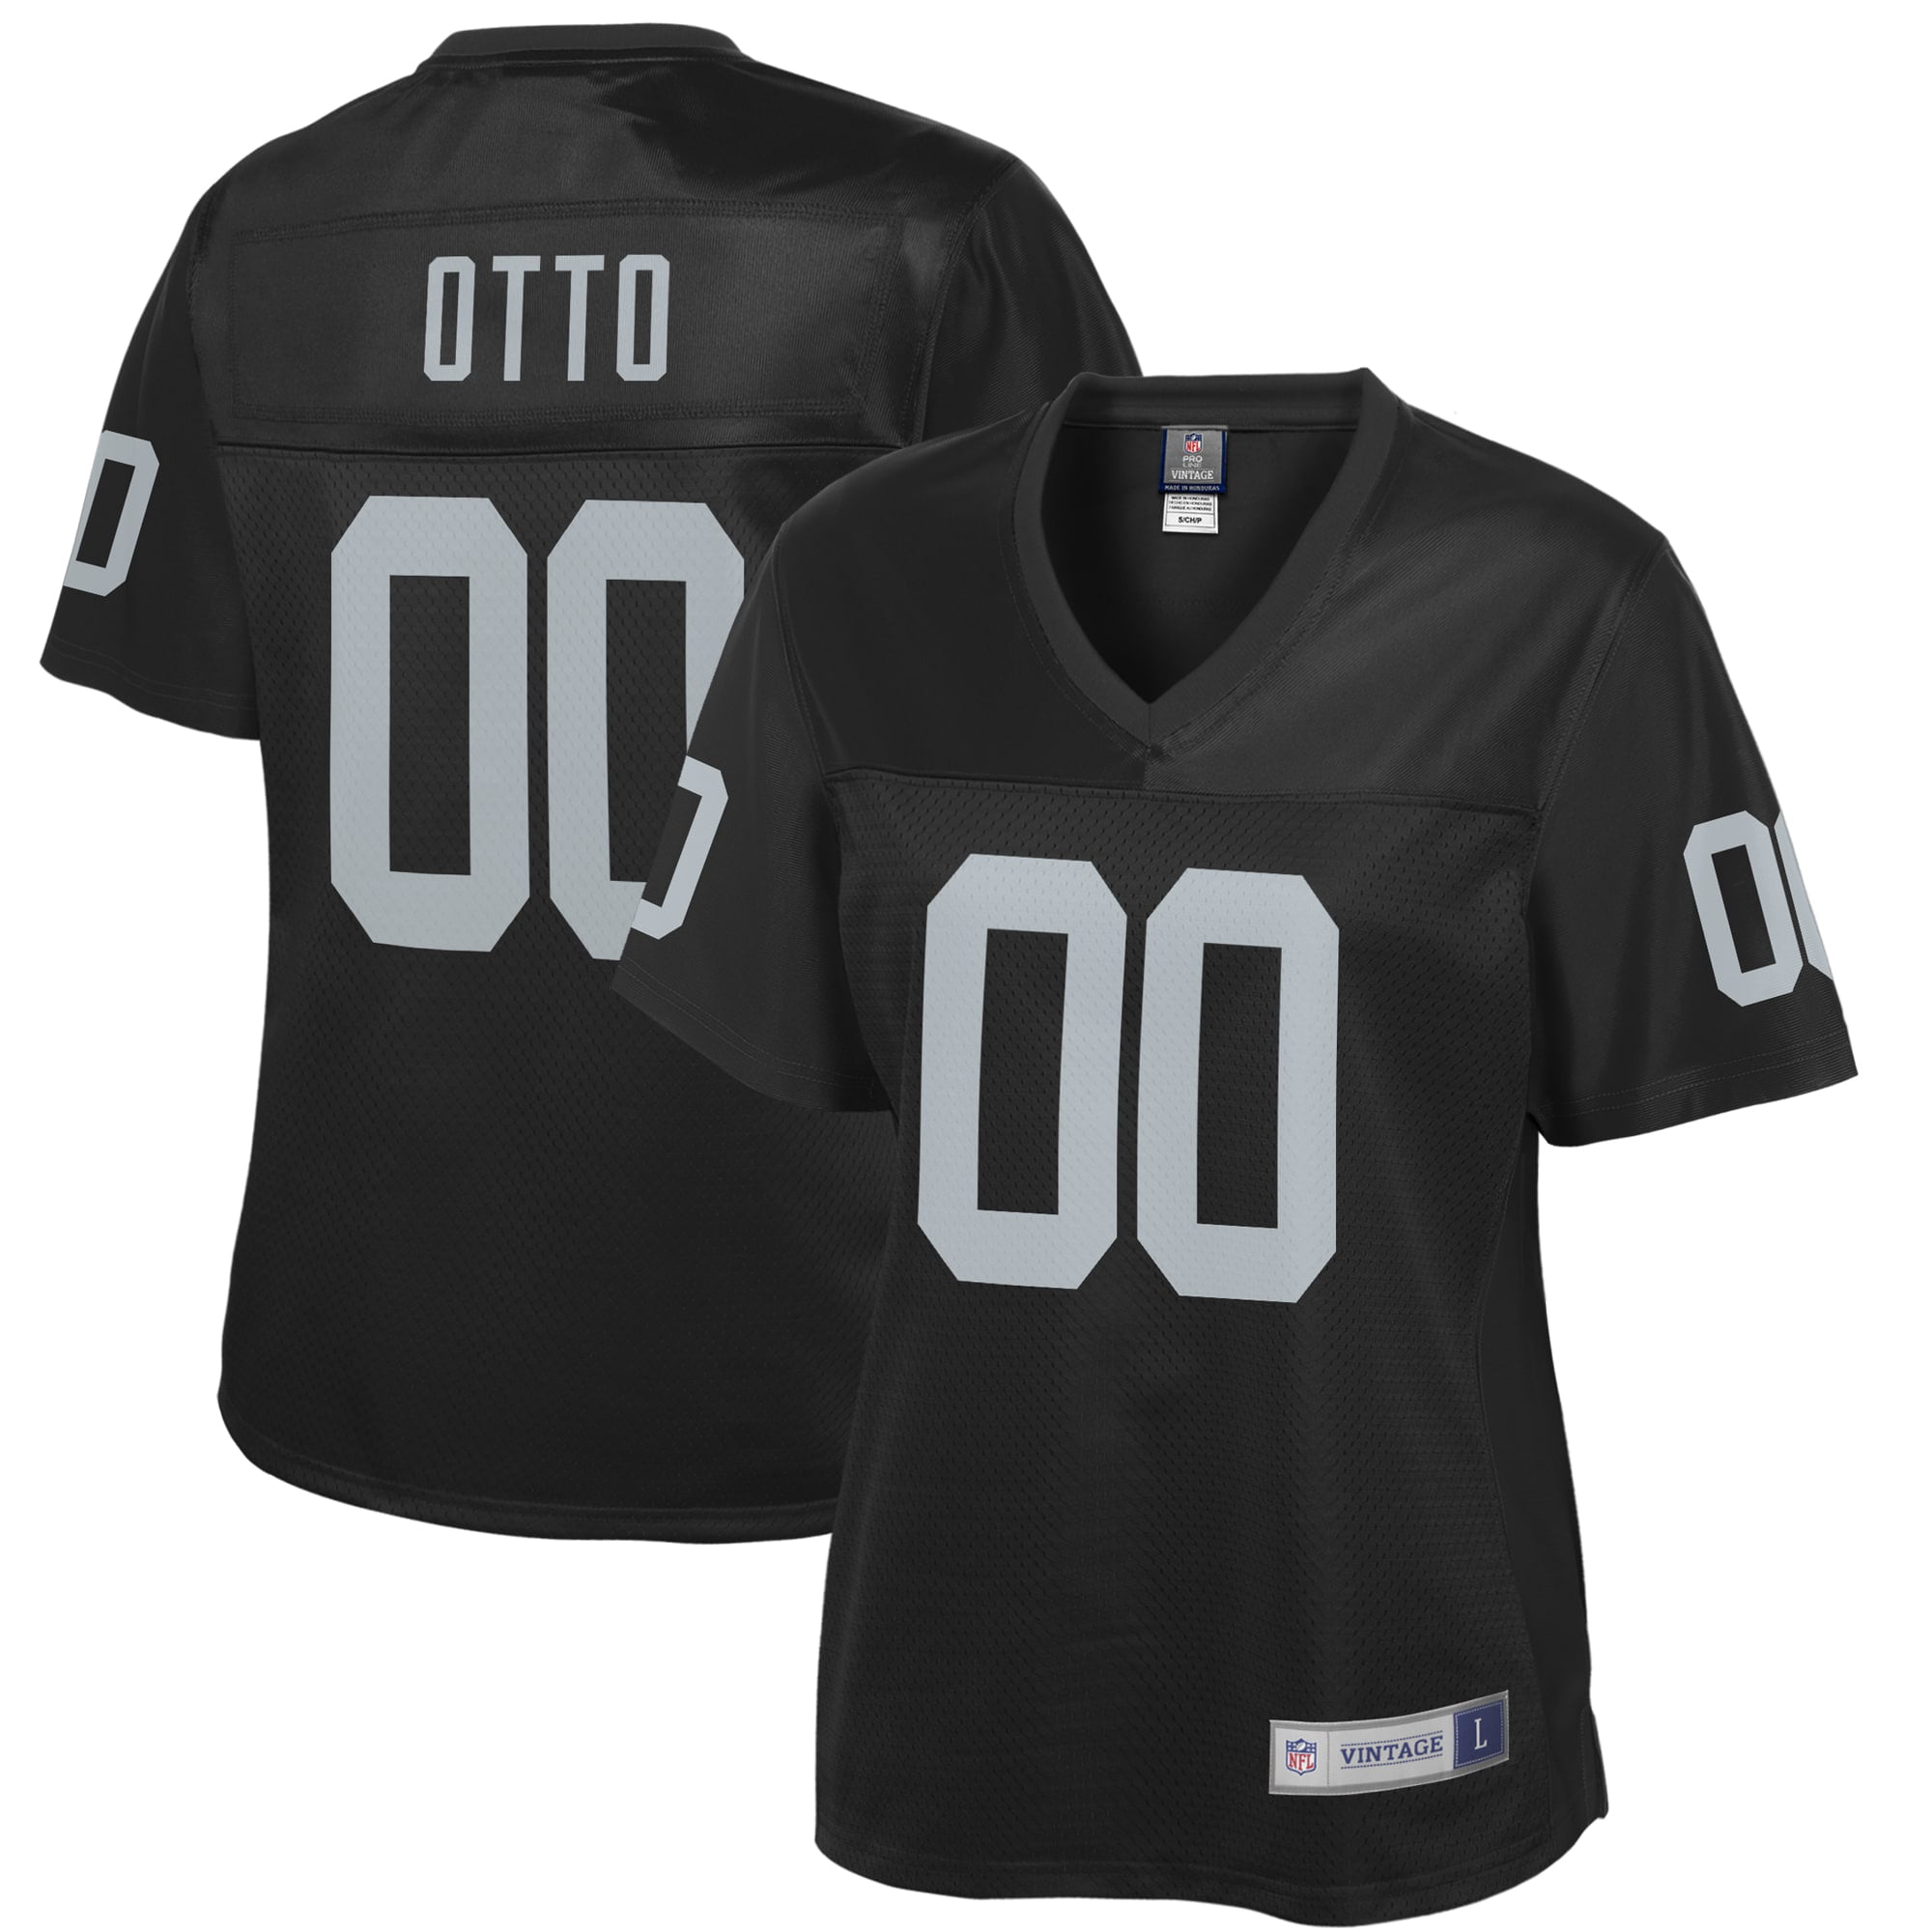 Jim Otto Las Vegas Raiders NFL Pro Line Women's Retired Player Replica Jersey - Black - Walmart.com